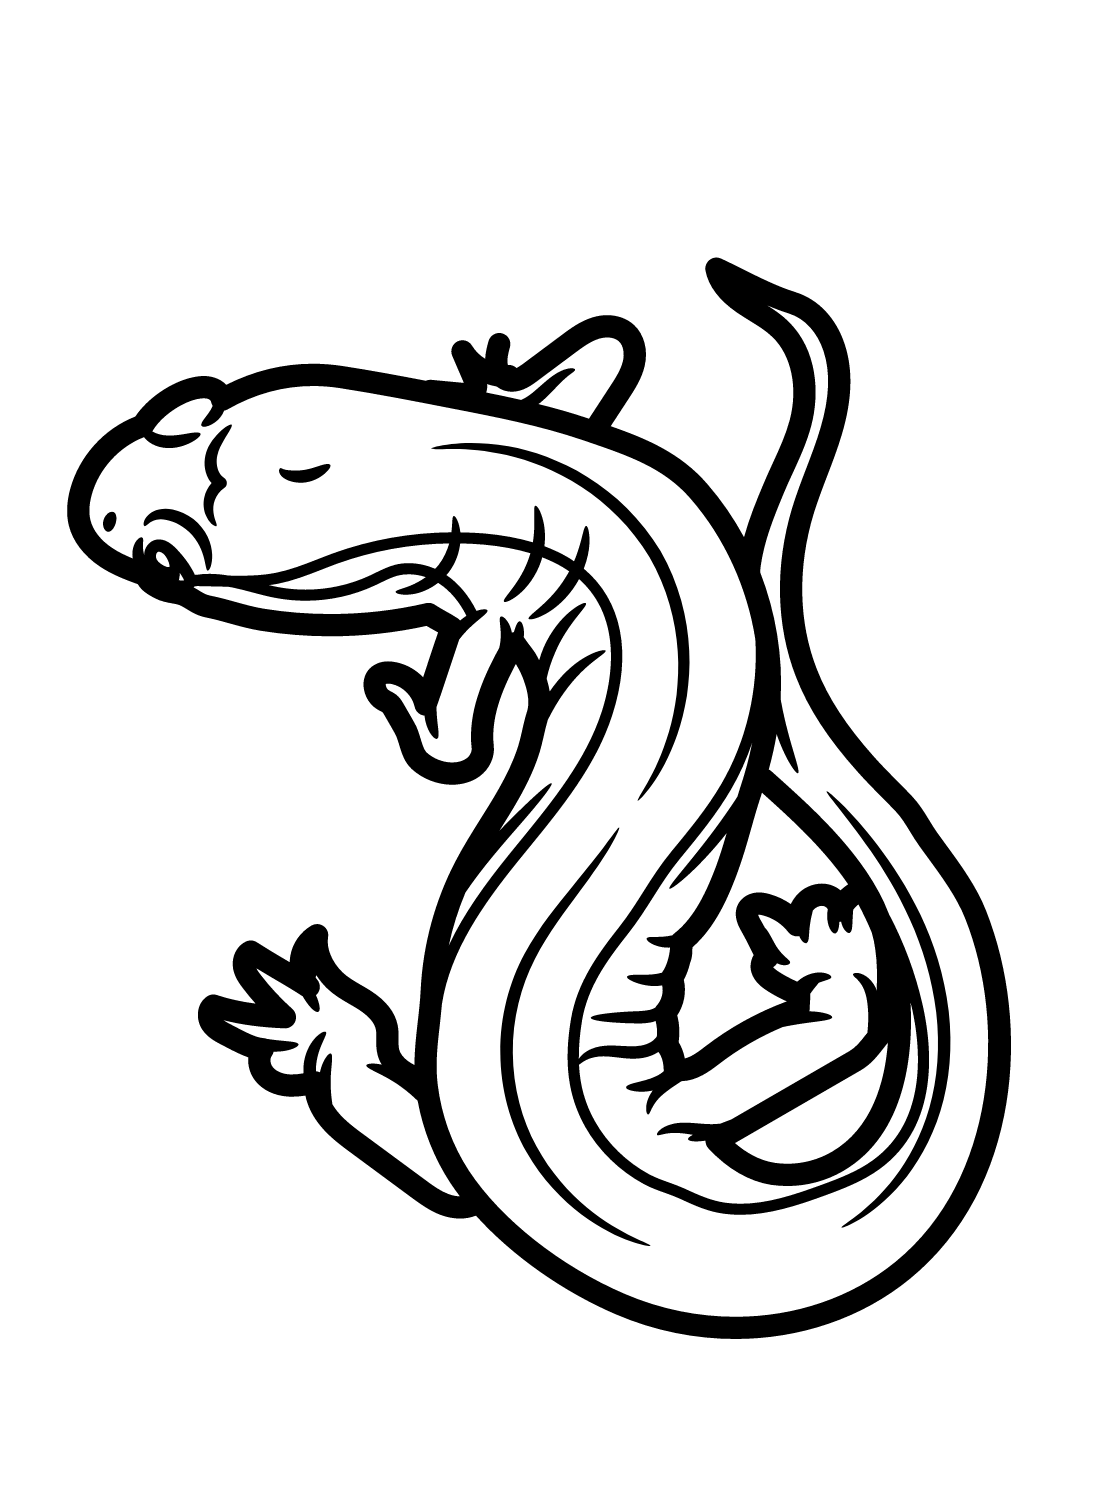 Junaluska Salamander Coloring Page